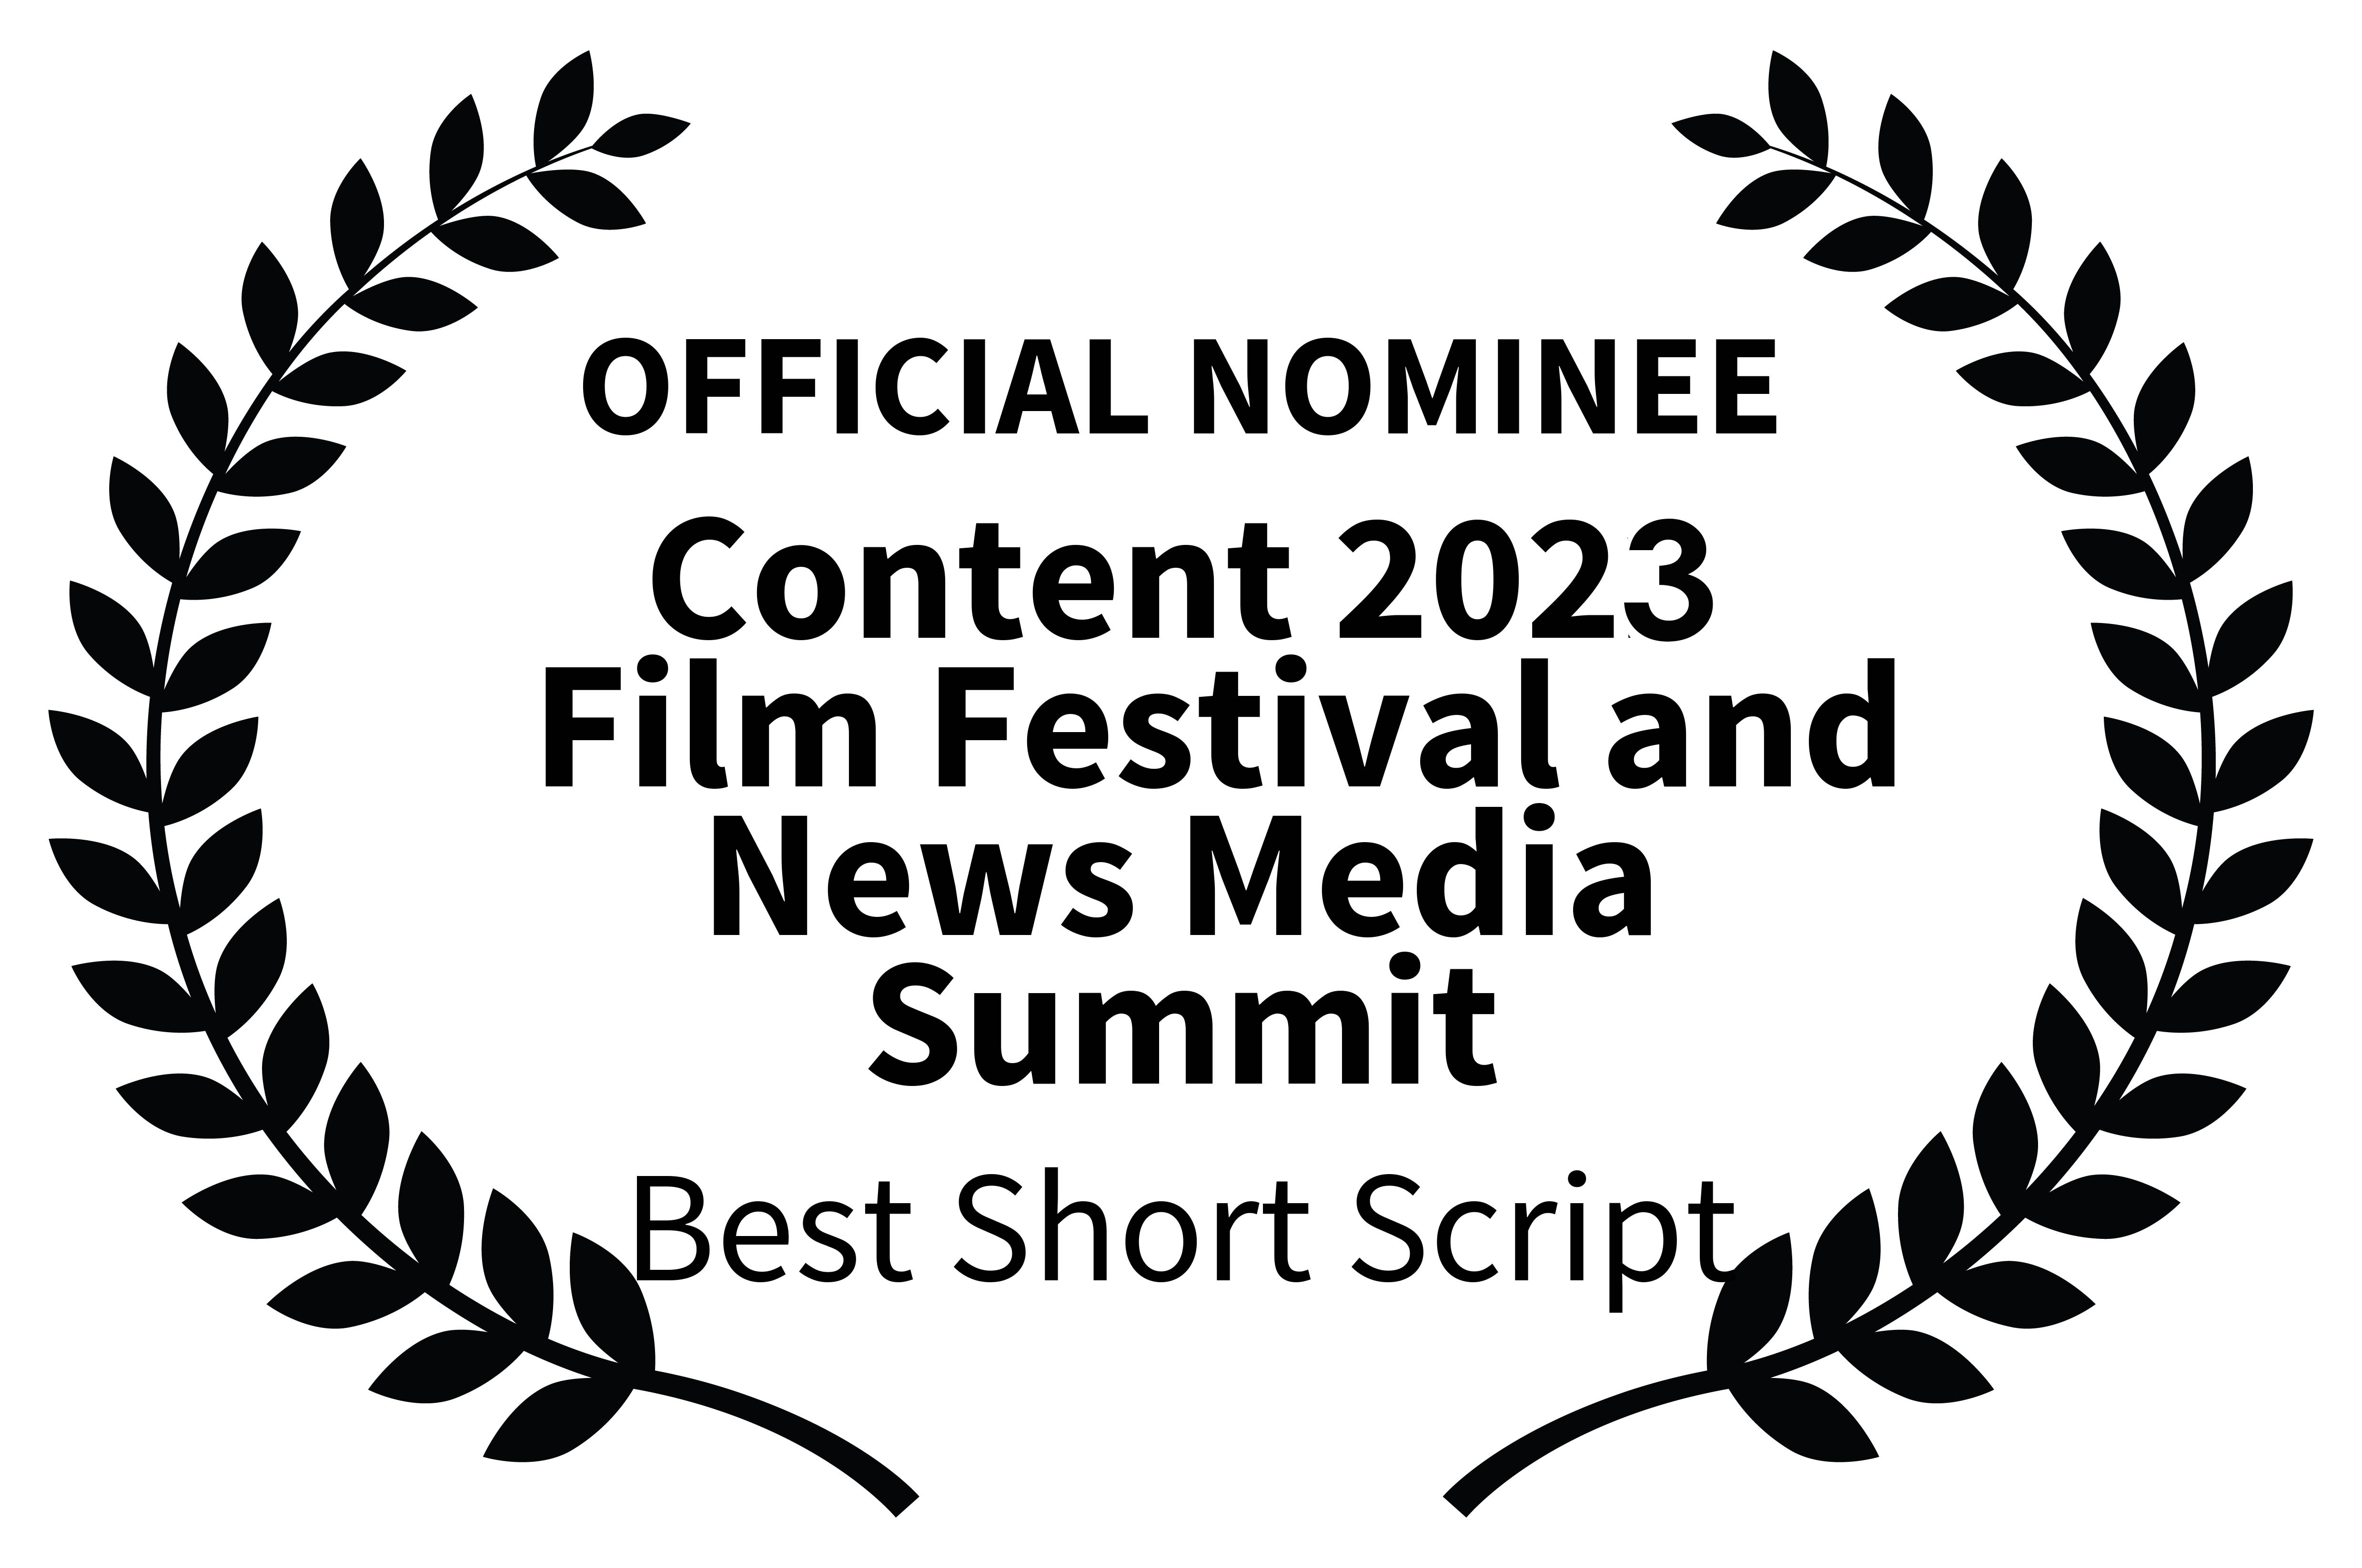 OFFICIAL NOMINEE-Content 2023 Film Festival and News Media Summit-Best Short Script